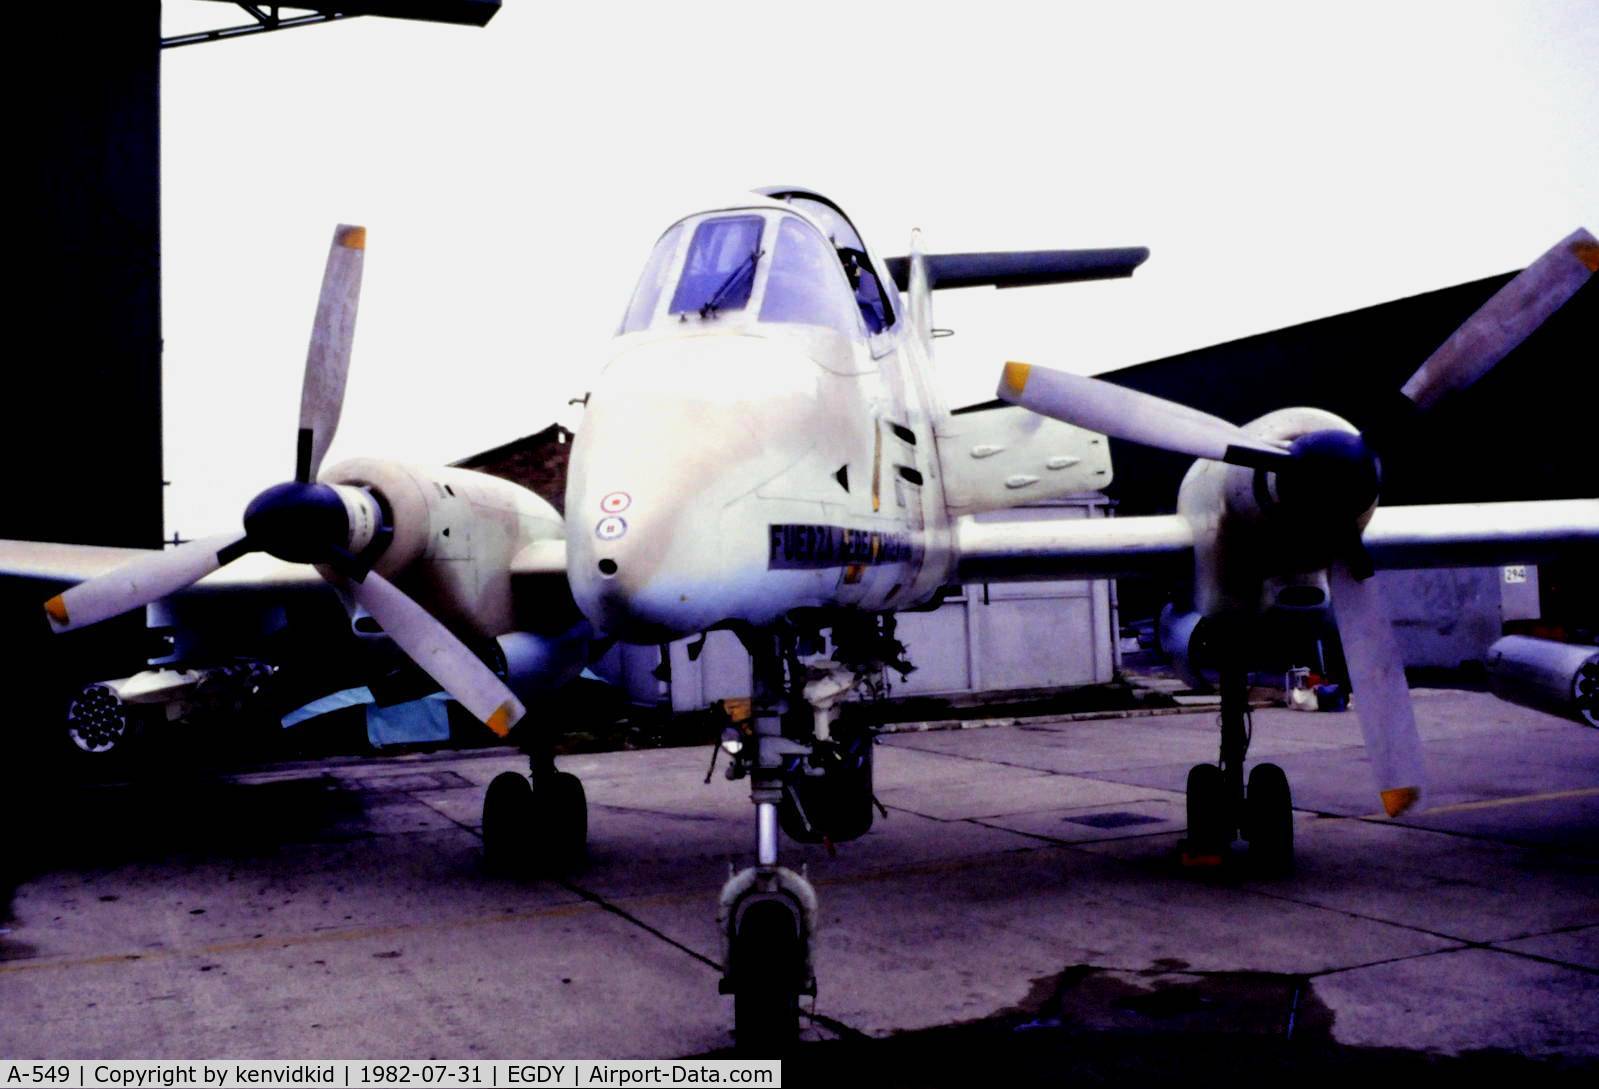 A-549, FMA IA-58A Pucará C/N 050, On static display at the 1982 Yeovilton air show.